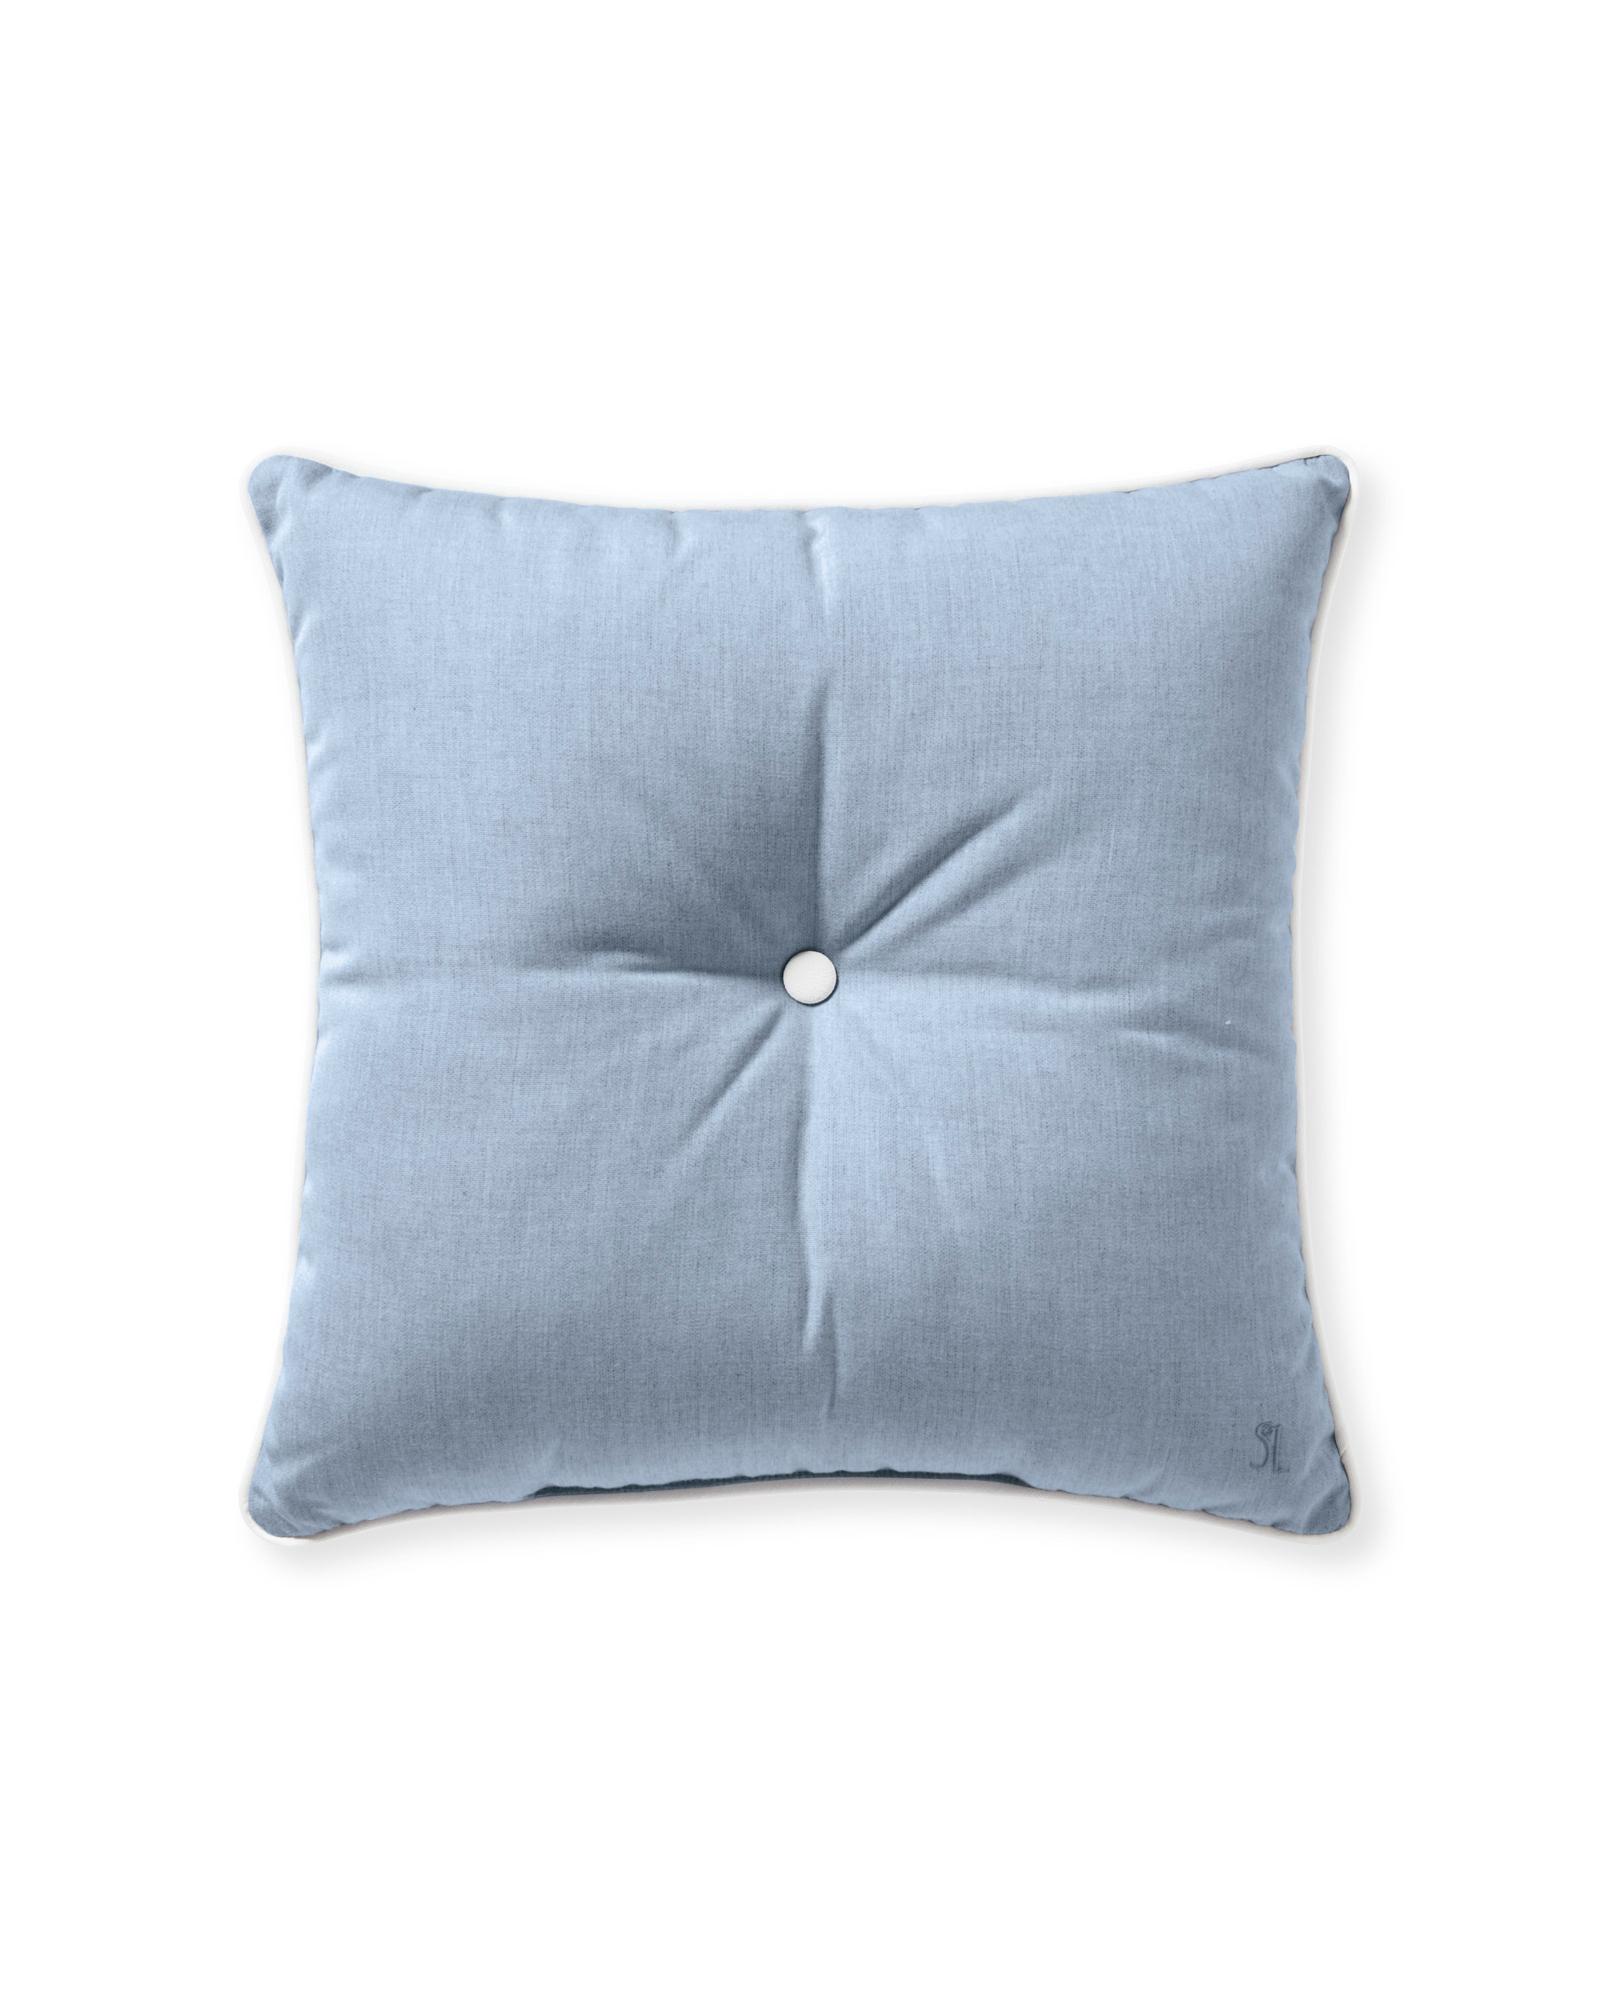 Perennials Harbor Stripe Pillow Cover in Coastal Blue, 14 x 30 | Serena & Lily